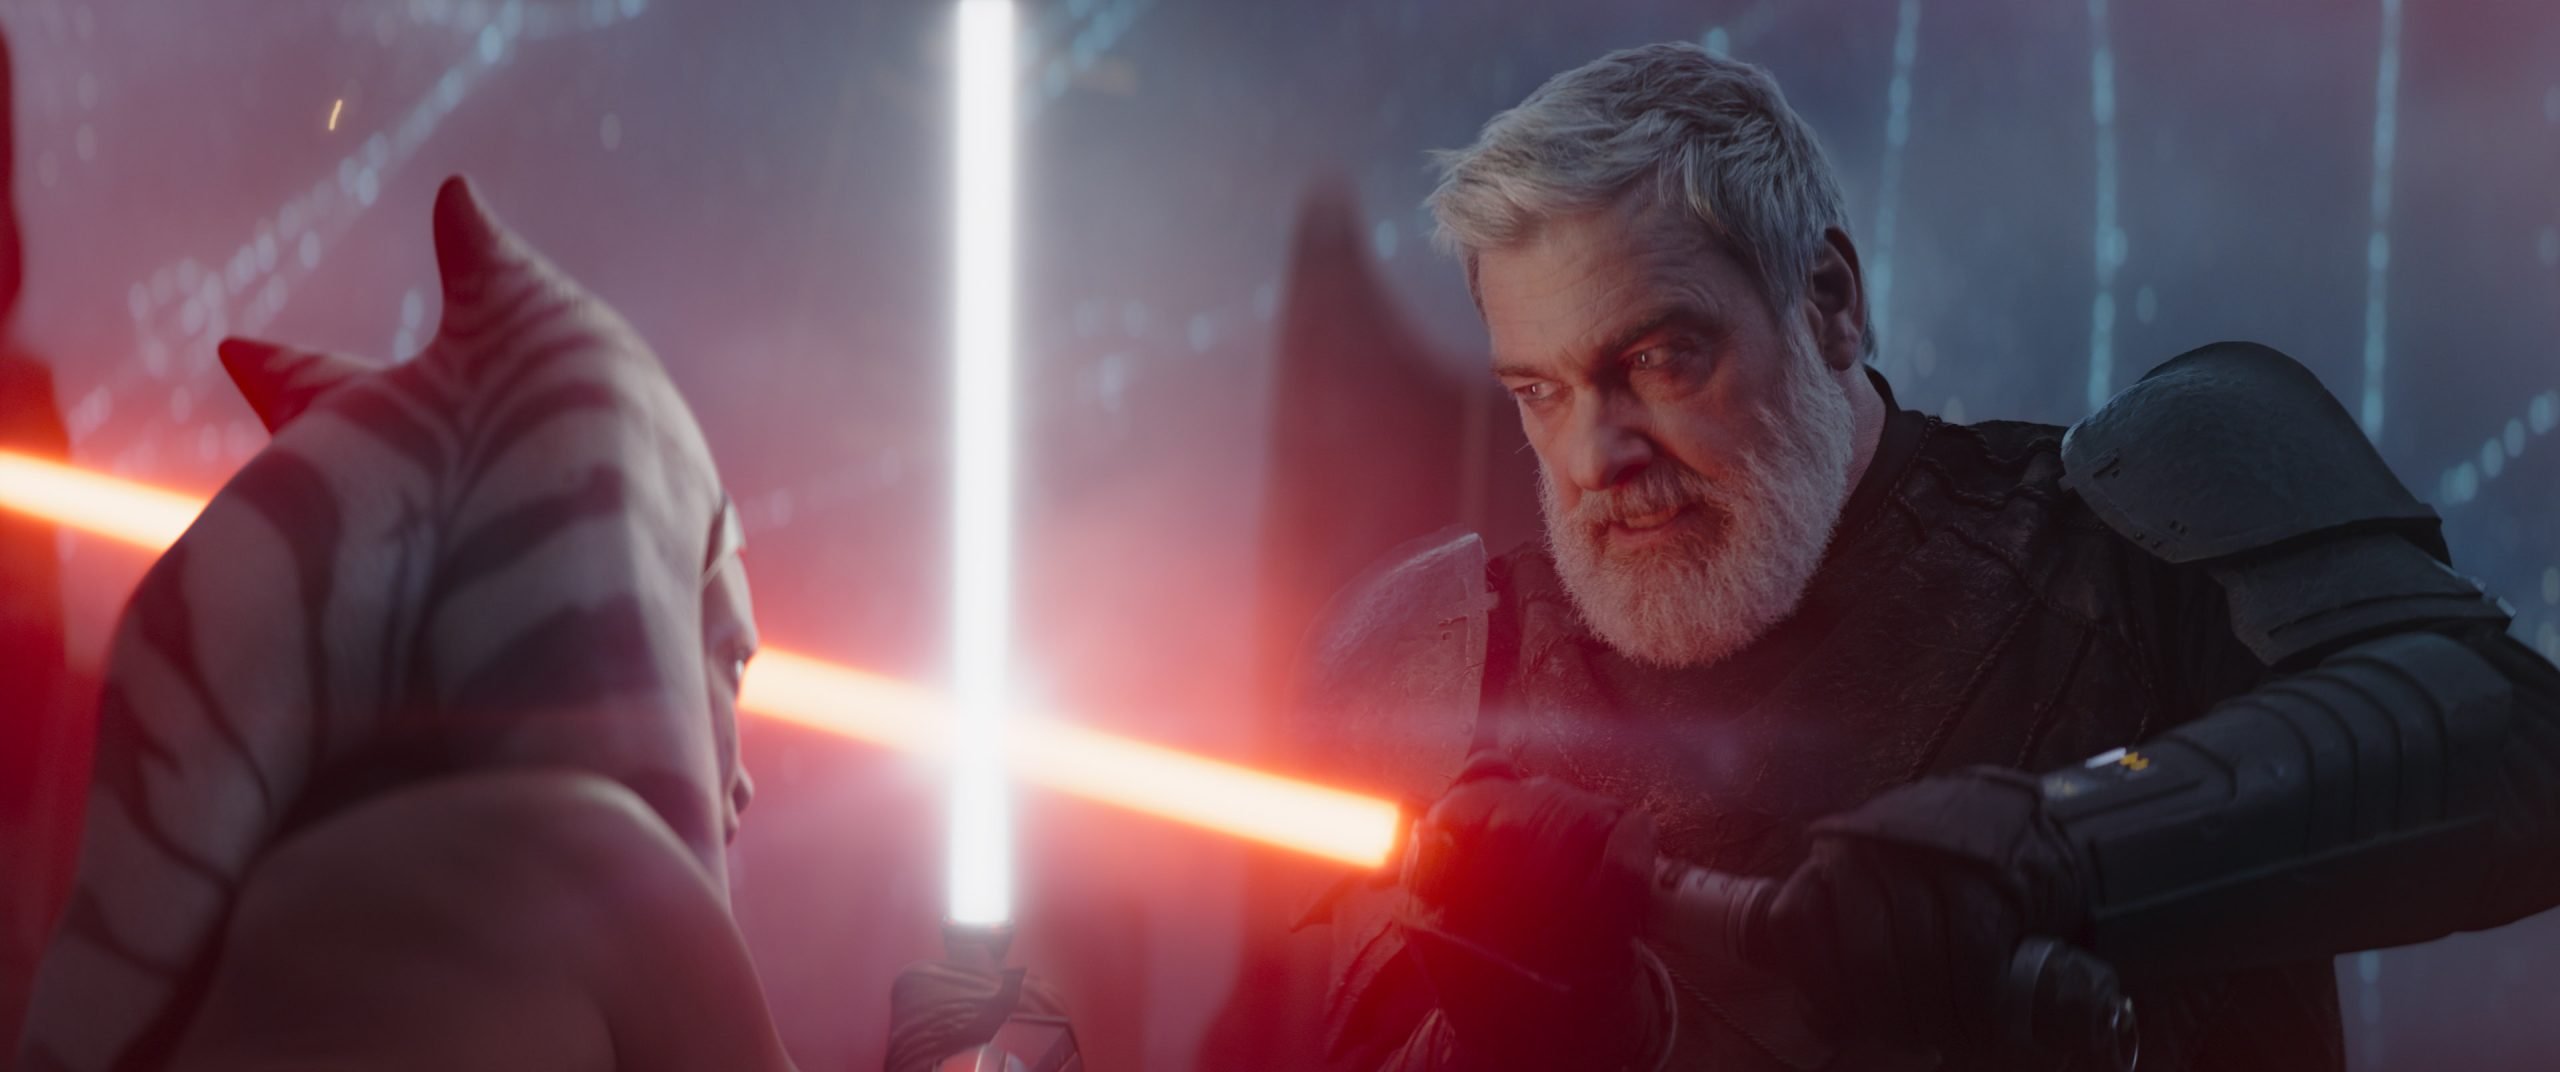 Director Peter Ramsey signs on for Star Wars: Ahsoka series